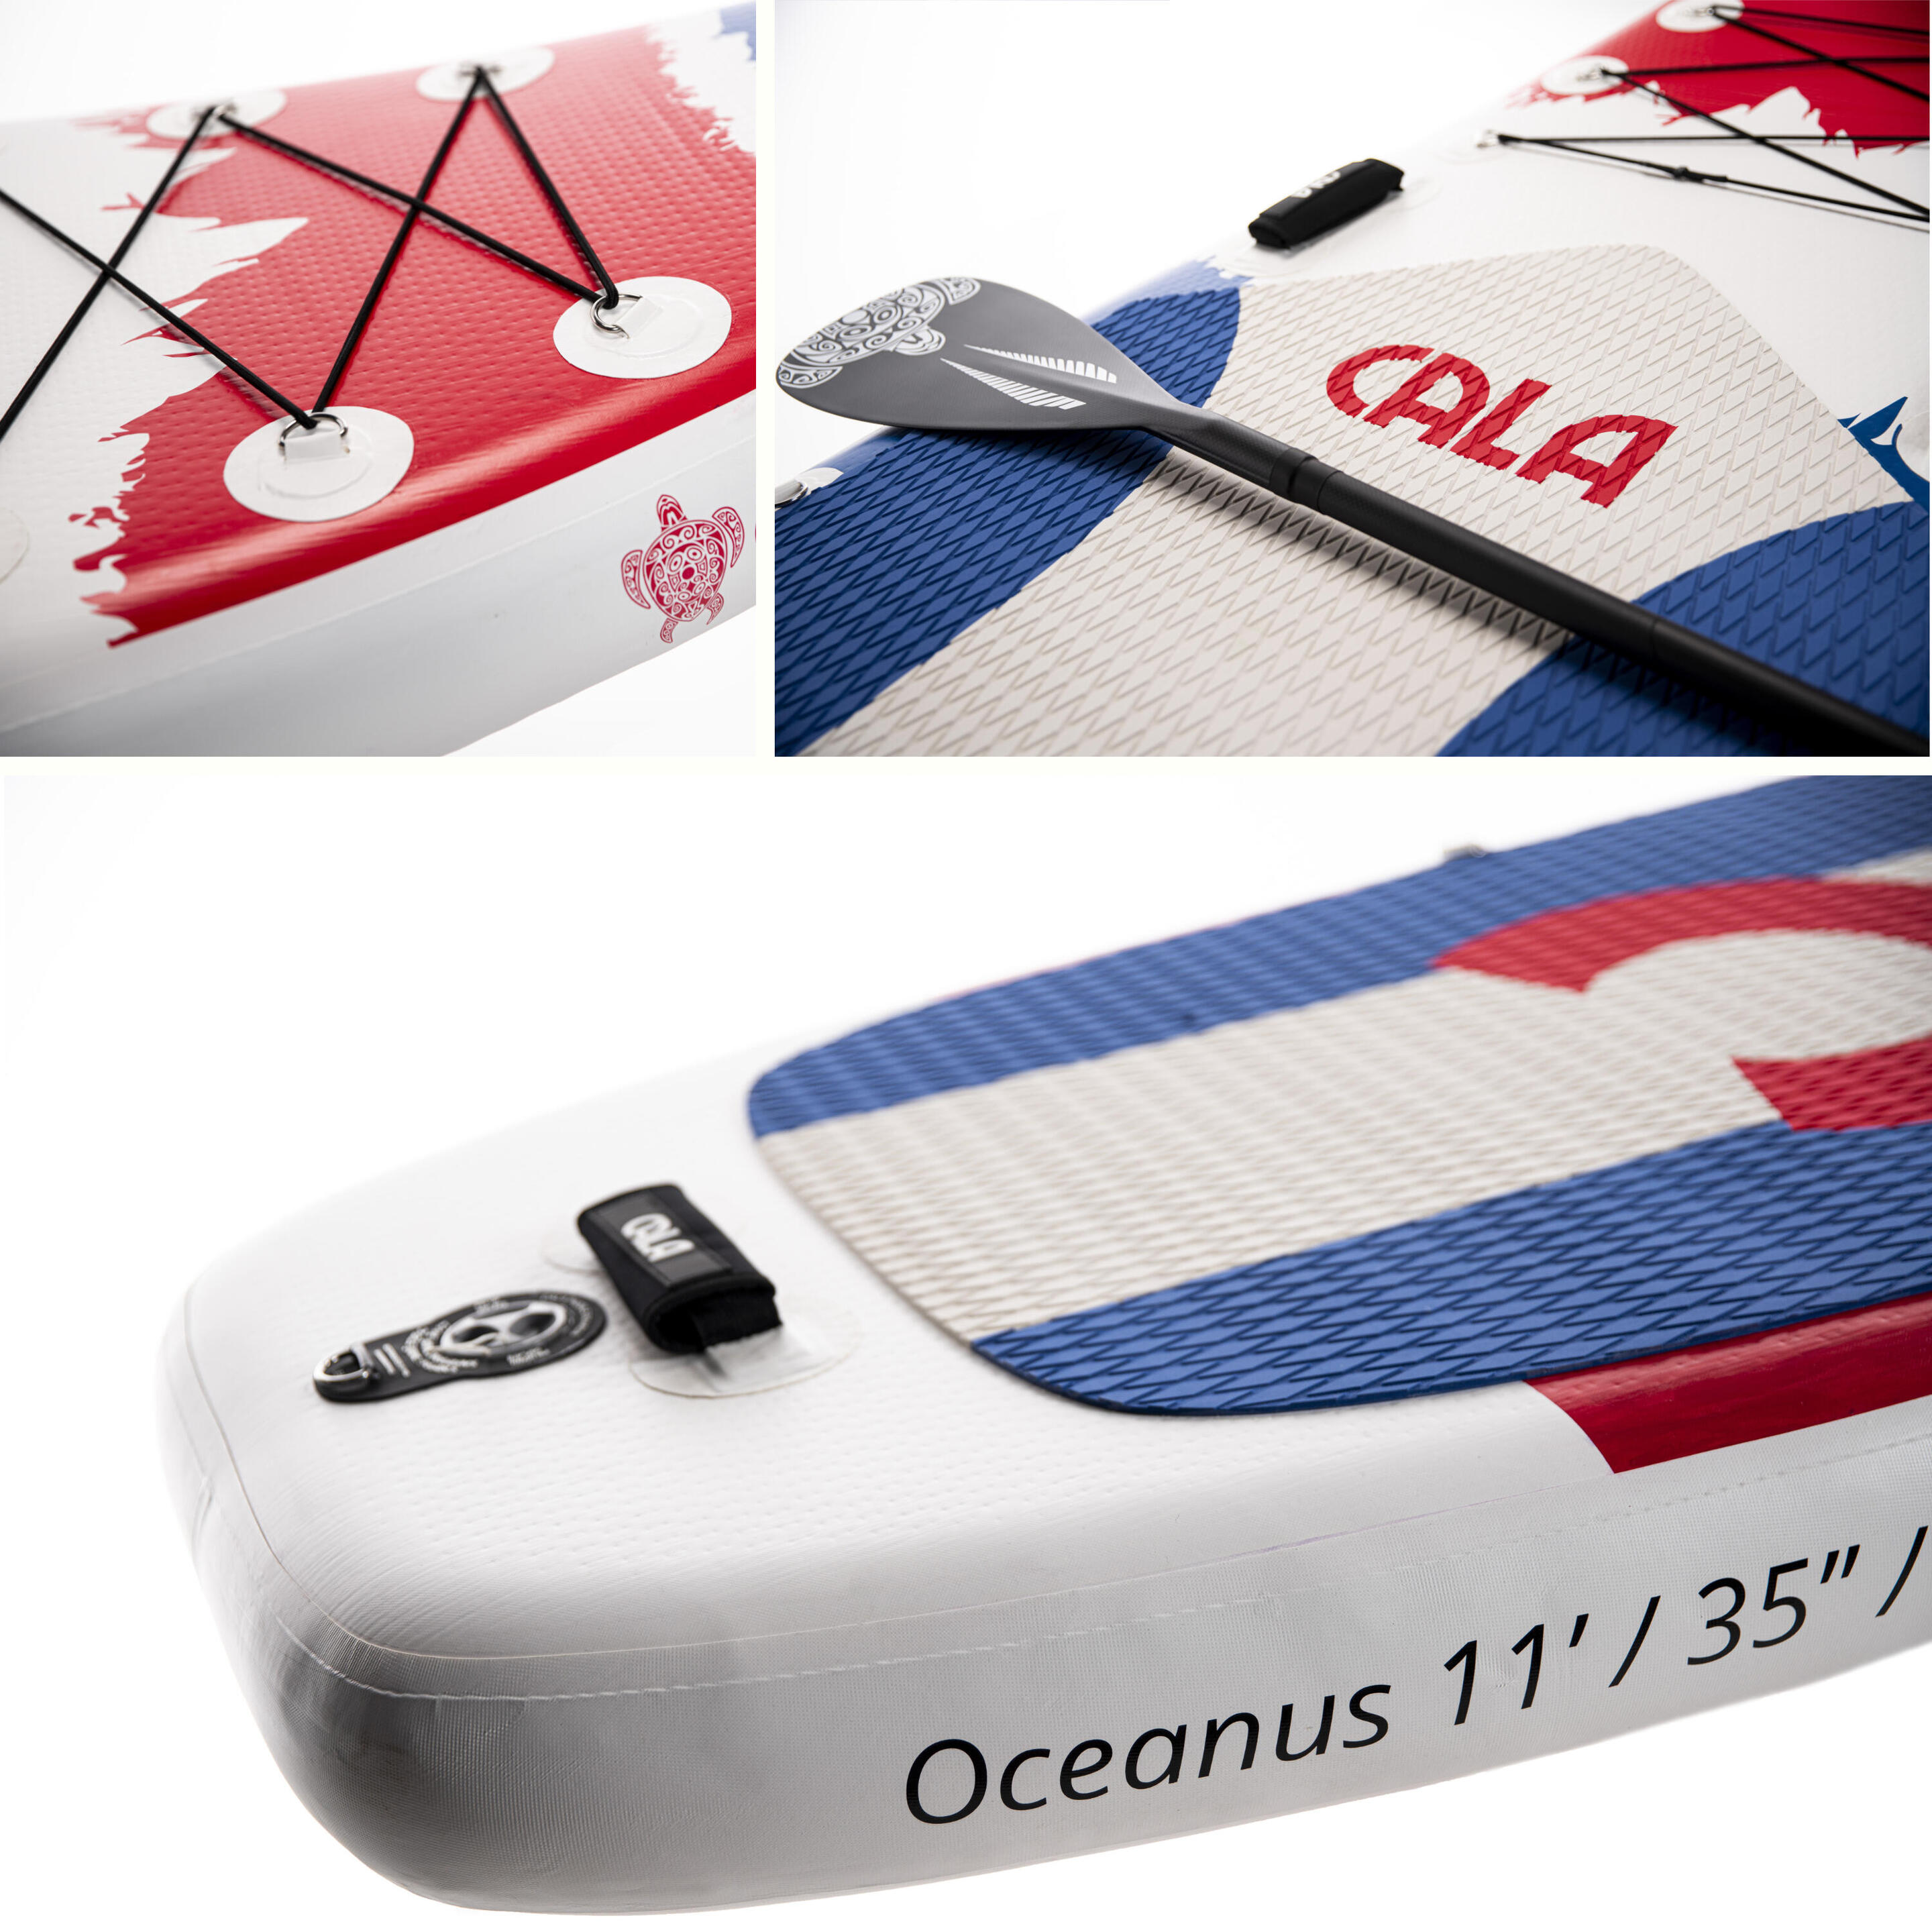 Tabla Paddle Surf Cala 11’0" Oceanus  Cruising Isup